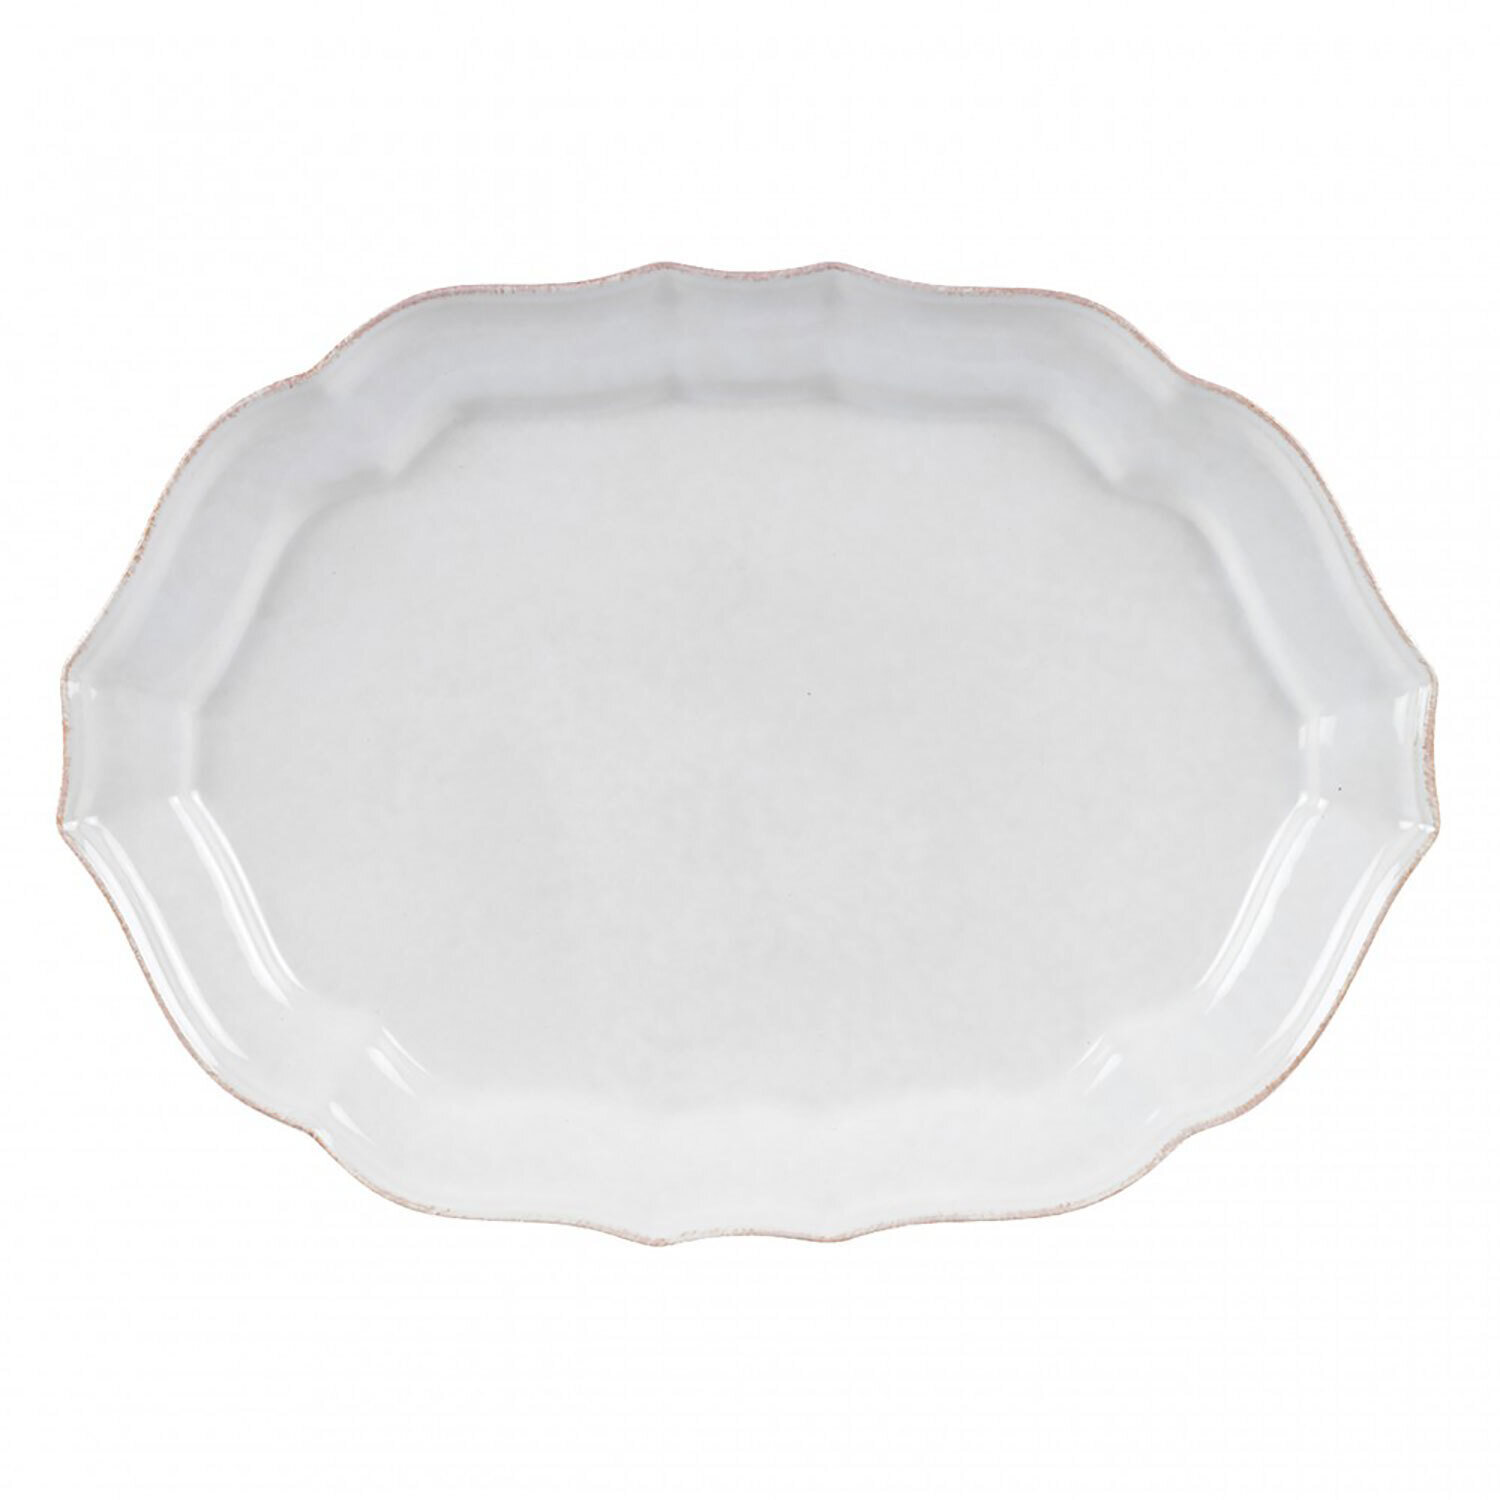 Casafina Impressions White Large Oval Platter IM535-WHI